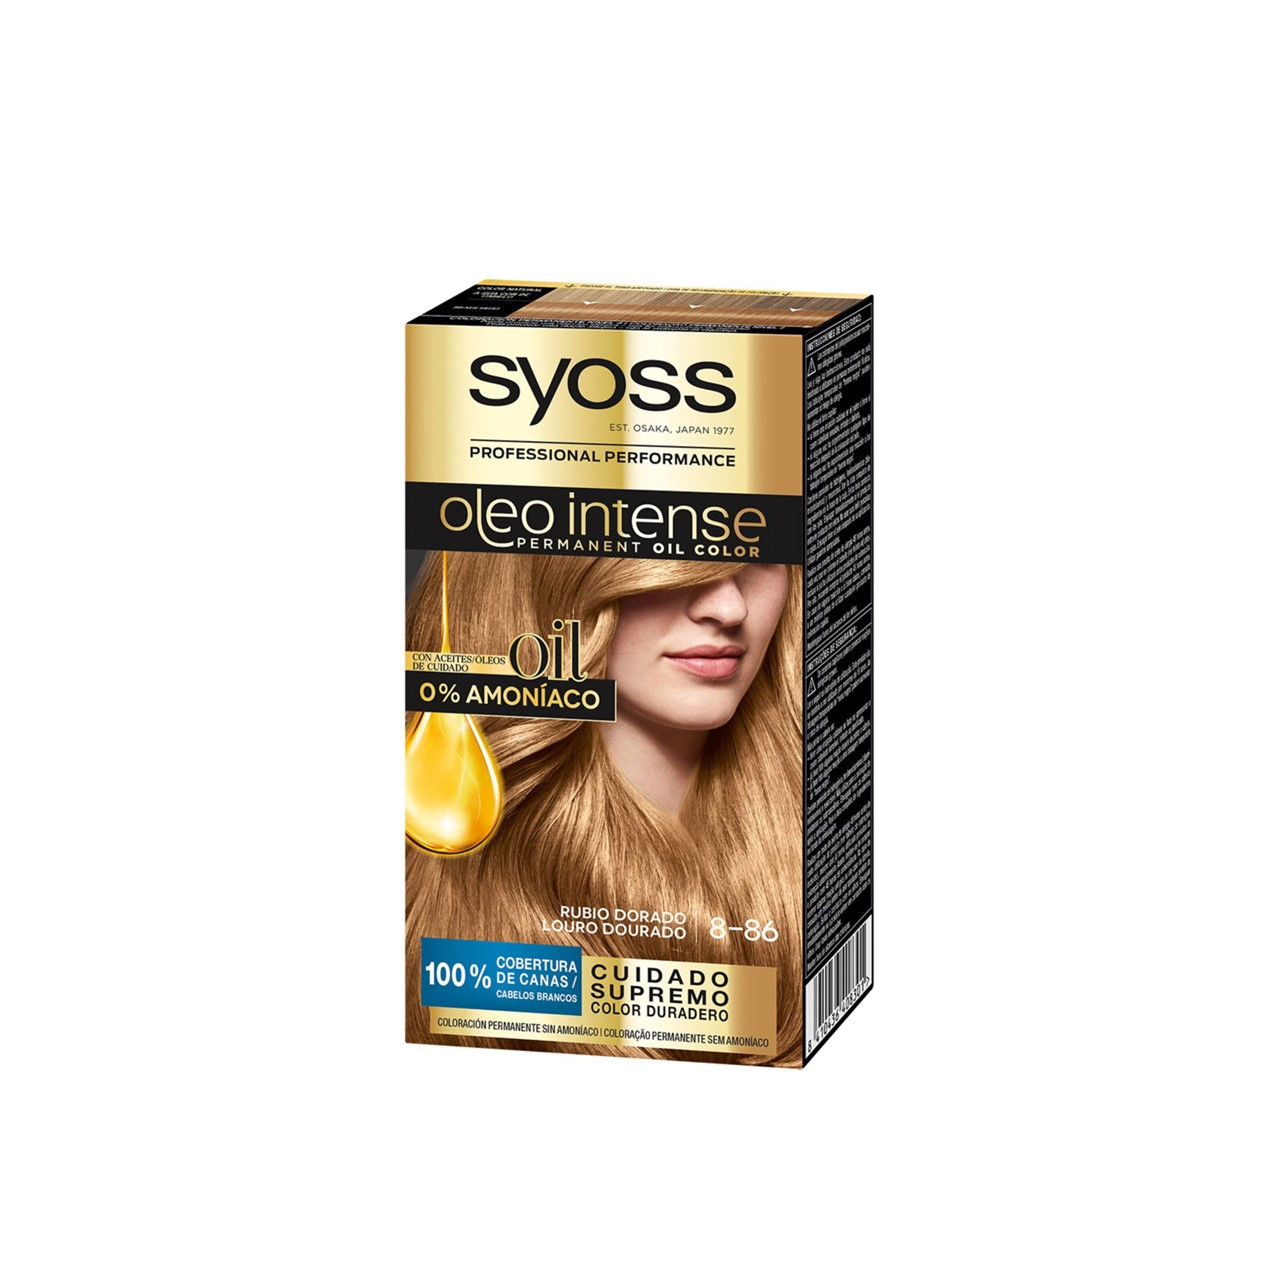 Syoss Oleo Intense Permanent Oil Color 8-86 Golden Blonde Permanent Hair Dye